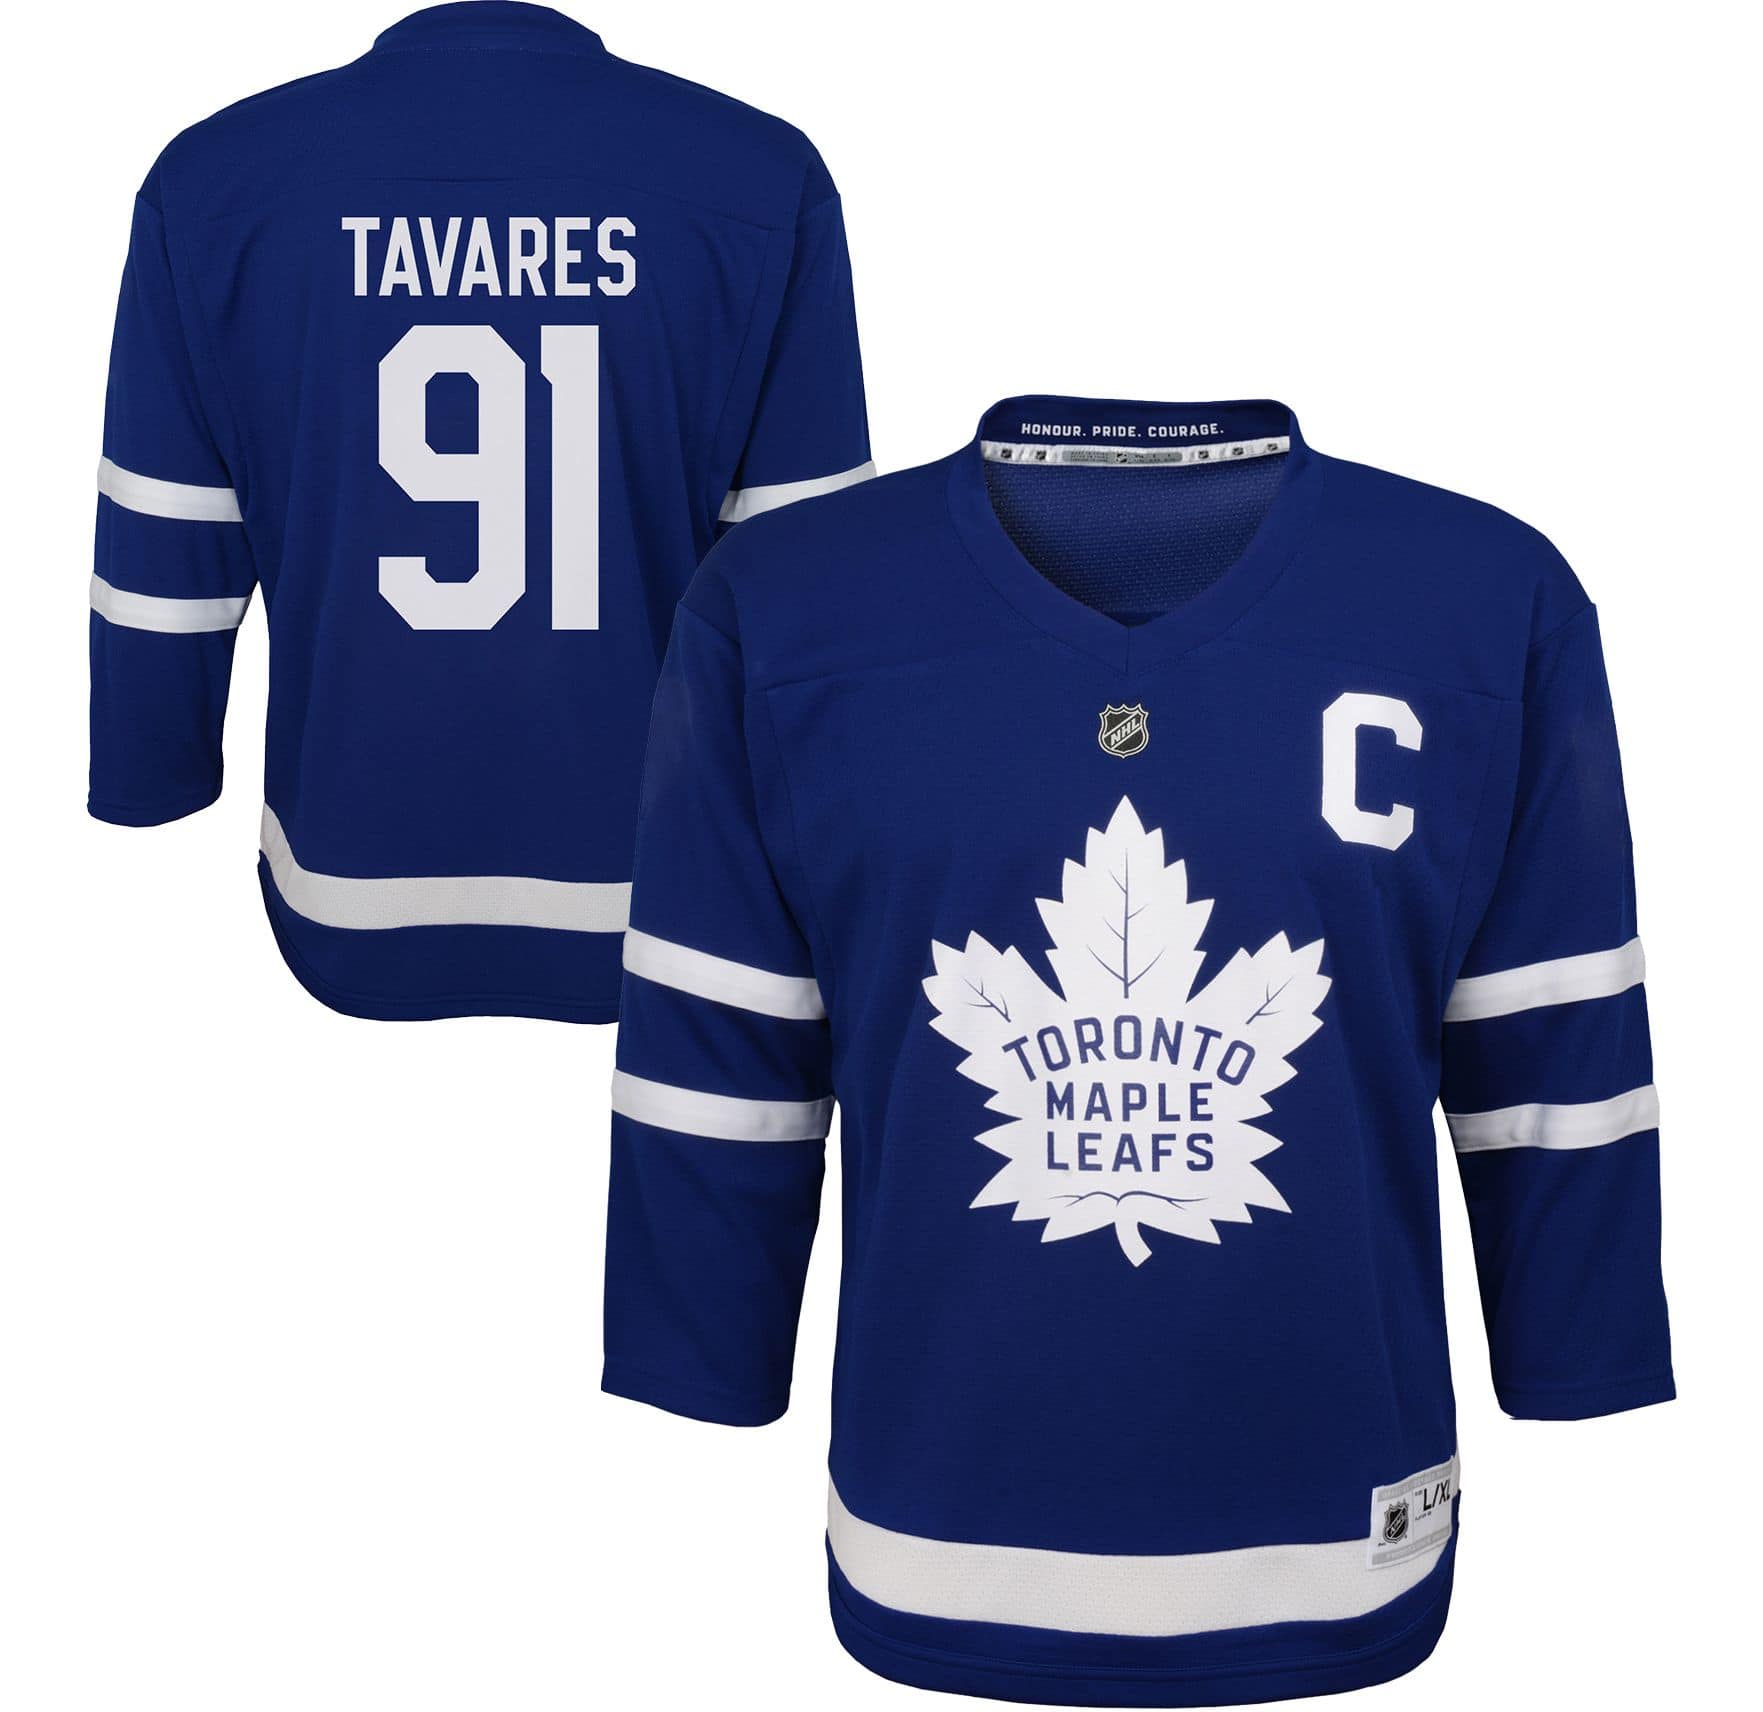 Tavares Toronto Maple Leaf Jersey